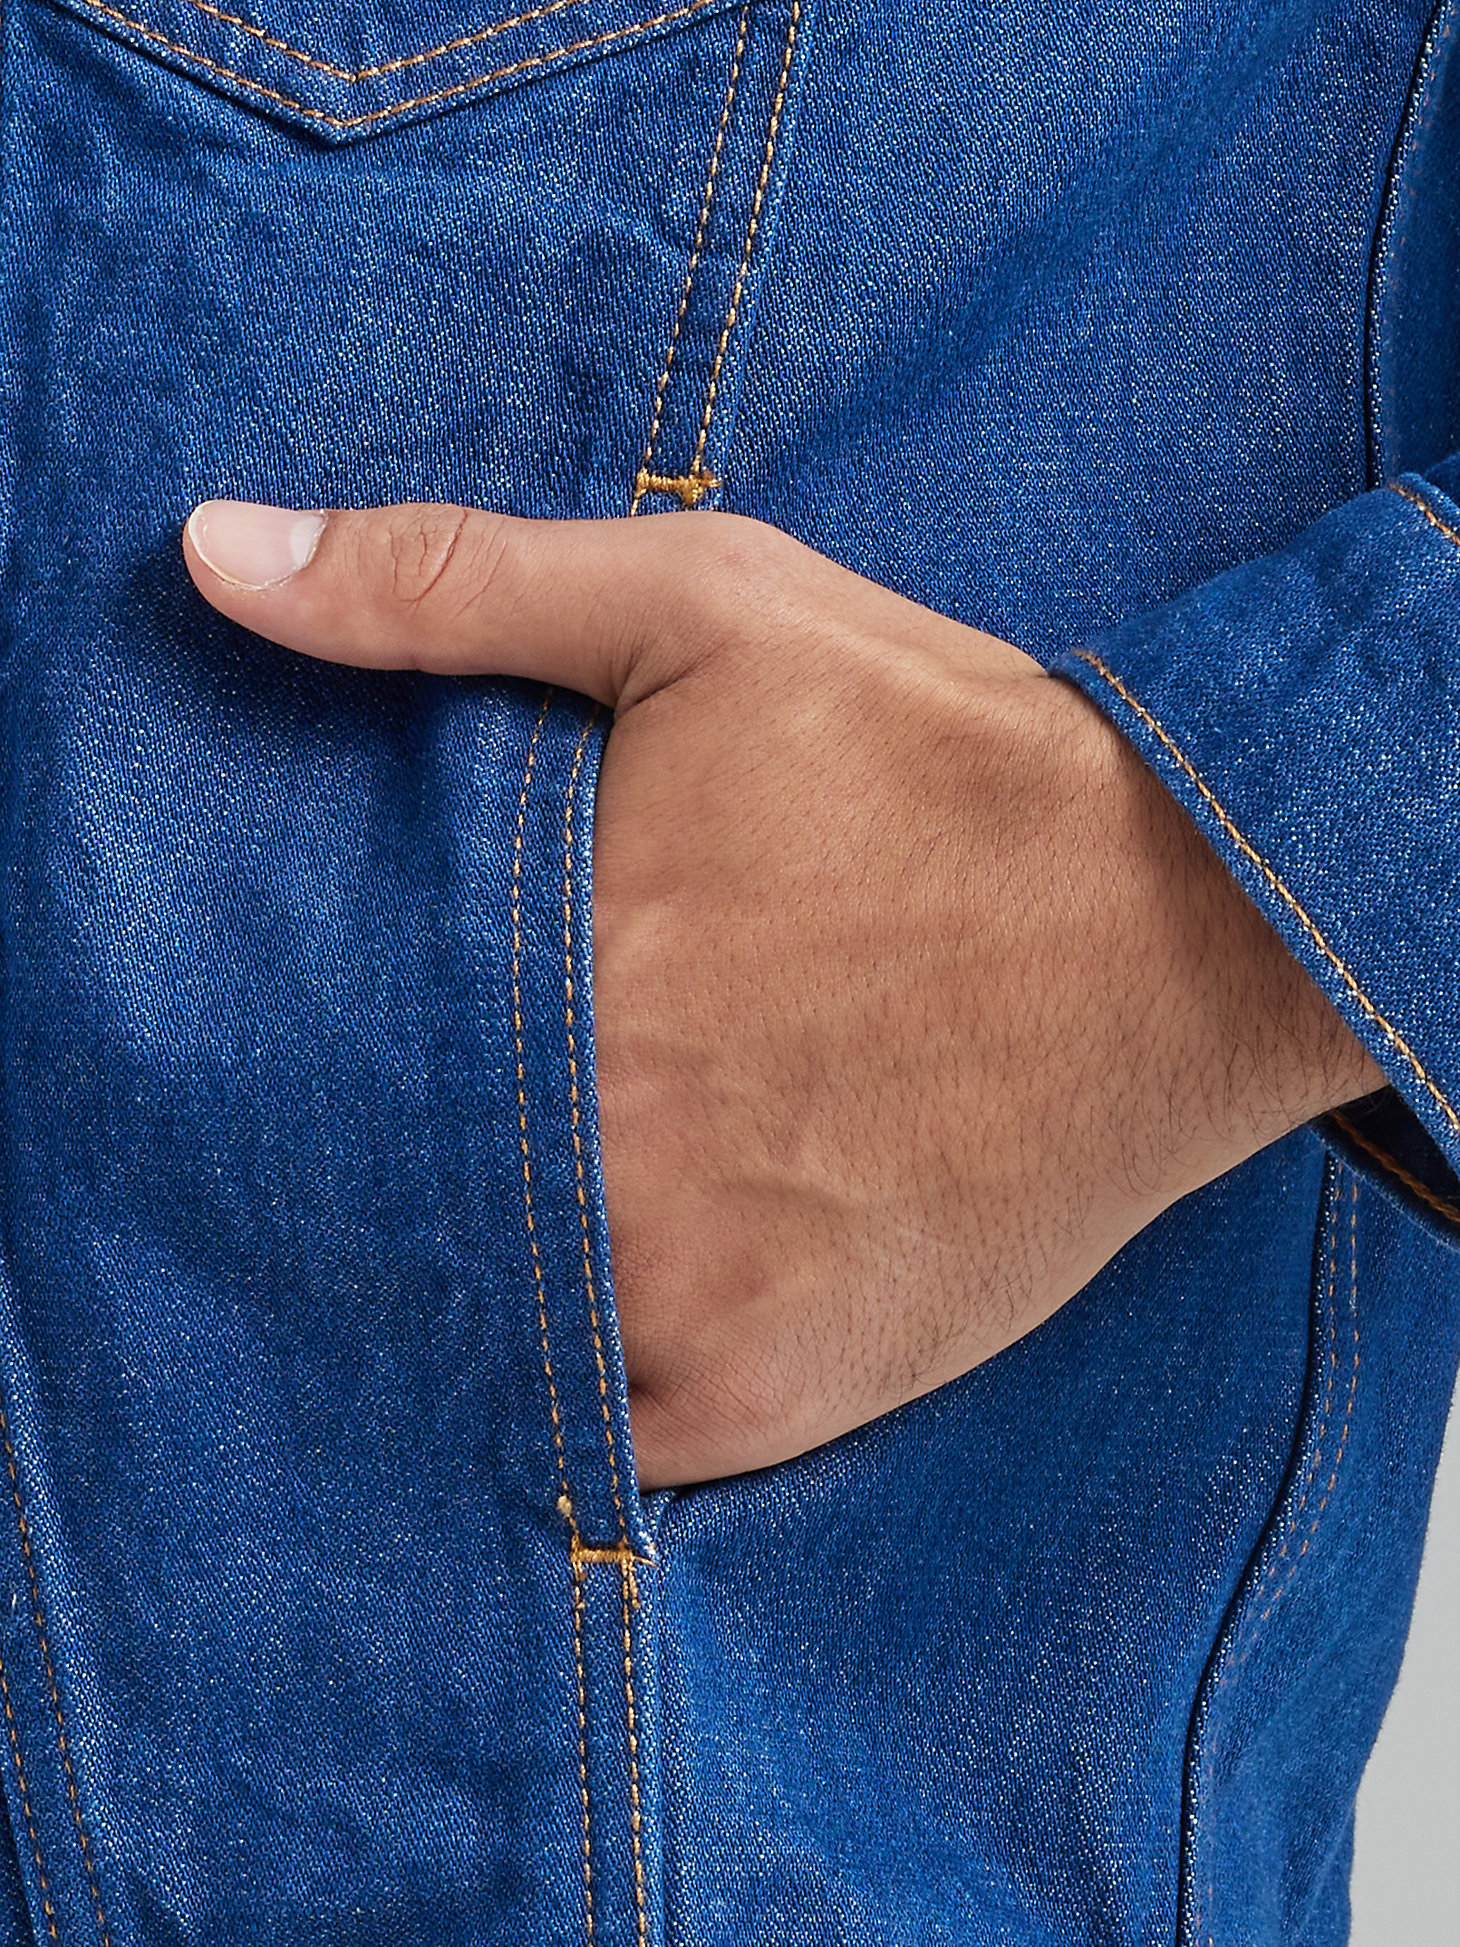 Men's Heritage Anti-Fit Jacket in Wrangler Blue alternative view 4